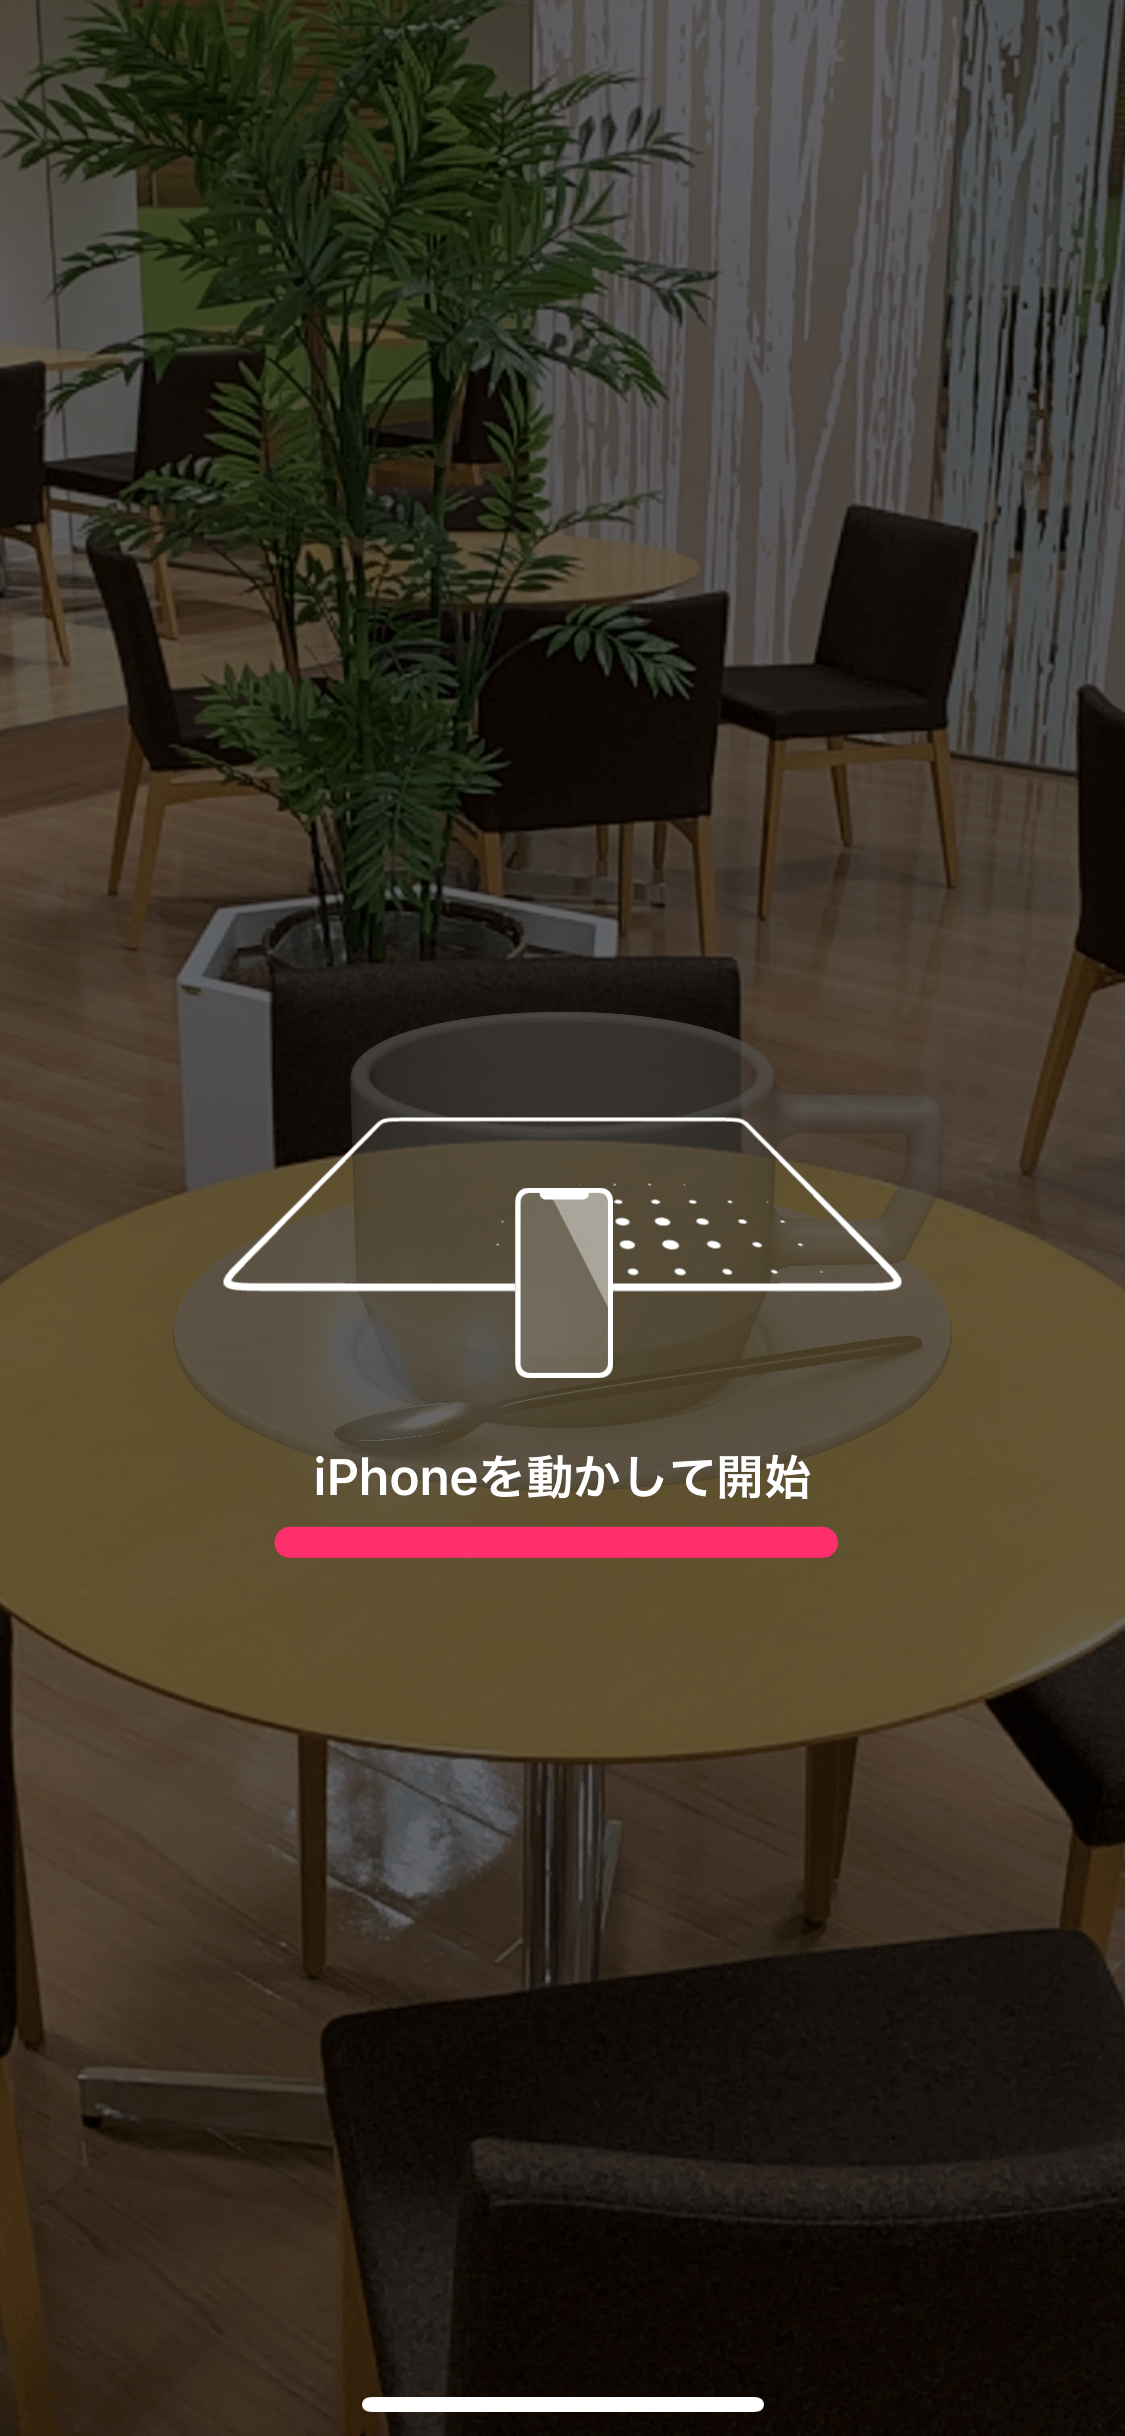 iPhoneでAR（拡張現実）を手軽に体験！ 「ARKit」と「IKEA Place」で自宅に何でも配置できる